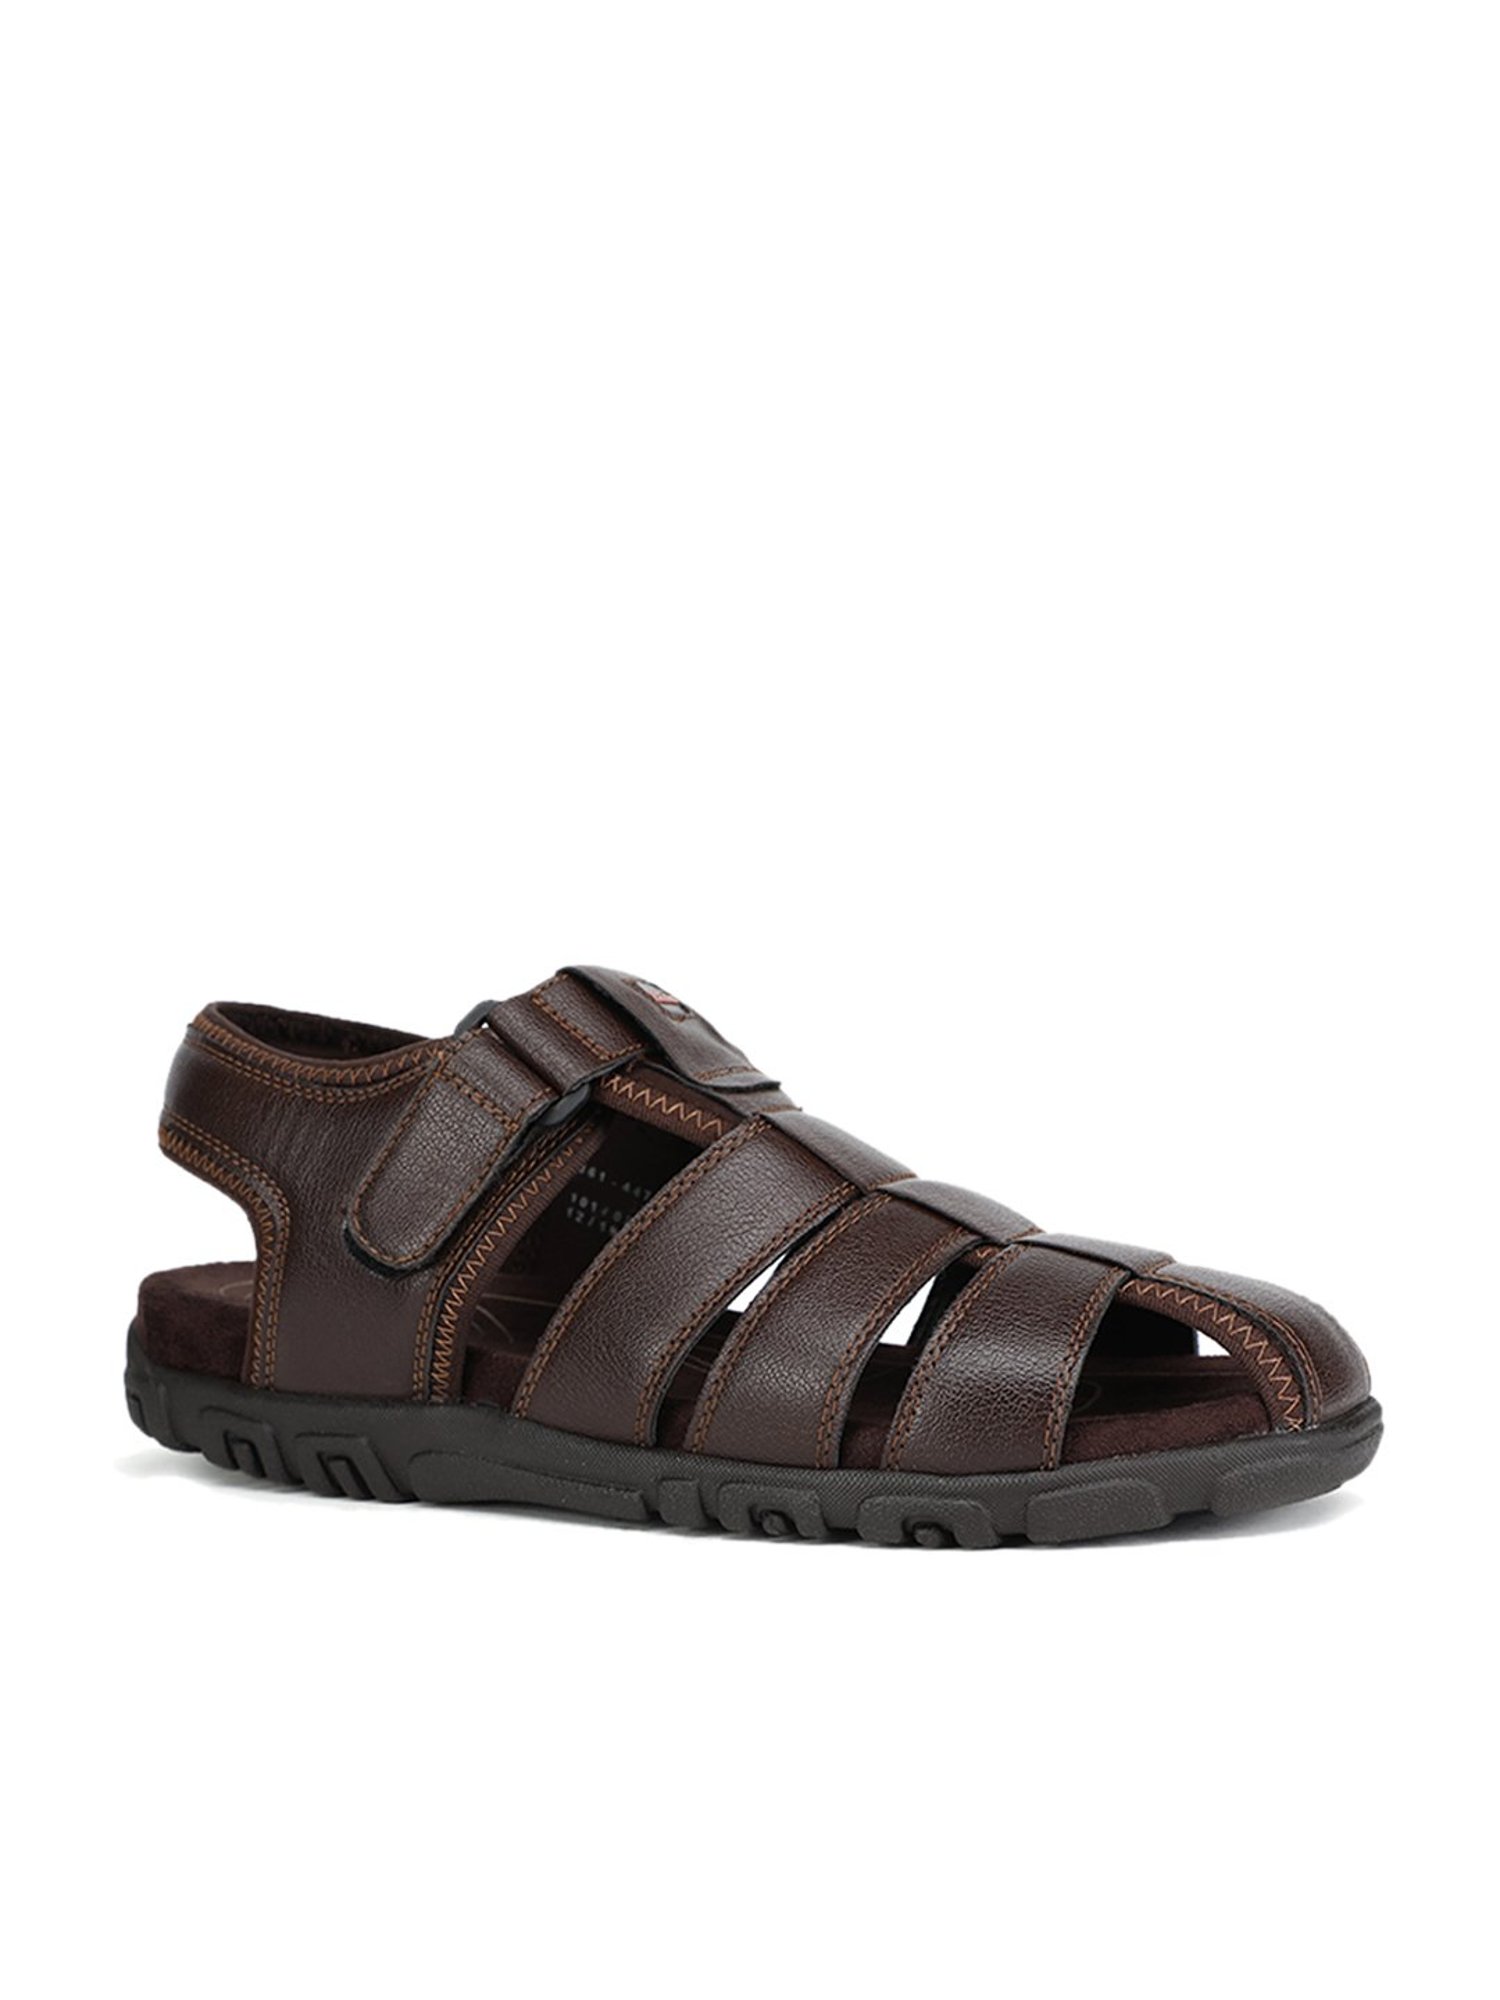 Bata Men PEDRA TR Black Sandals, (8716310) UK 6 : Amazon.in: Fashion